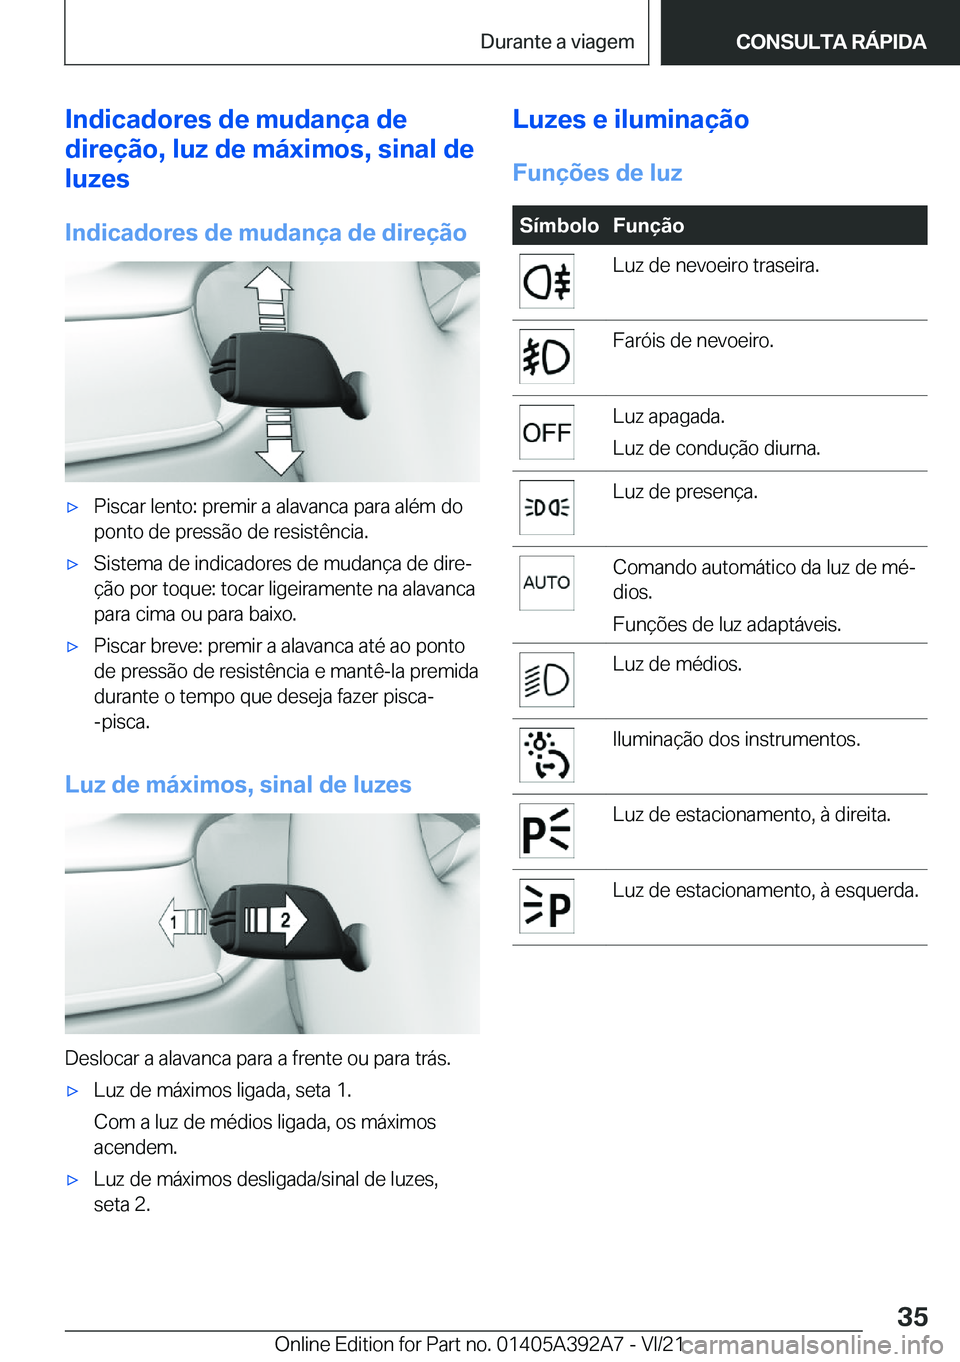 BMW 4 SERIES 2022  Manual do condutor (in Portuguese) �I�n�d�i�c�a�d�o�r�e�s��d�e��m�u�d�a�n�